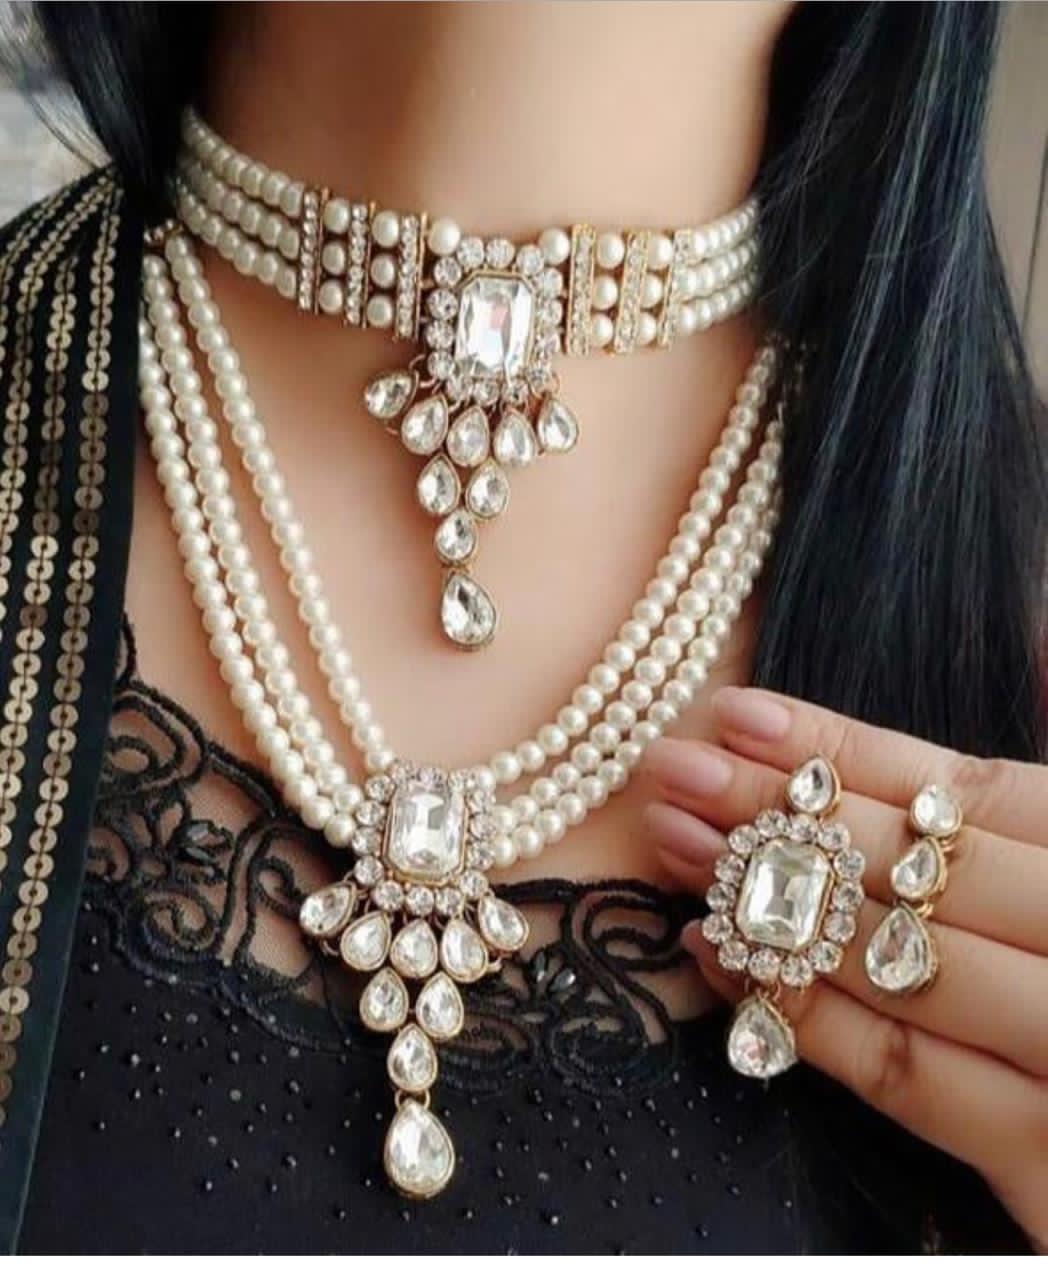 Mesmerising Pearl Wedding Jewelry Ideas For Every Jewelry Set | Wedding  jewelry sets, Pearl necklace designs, Bridal jewelry